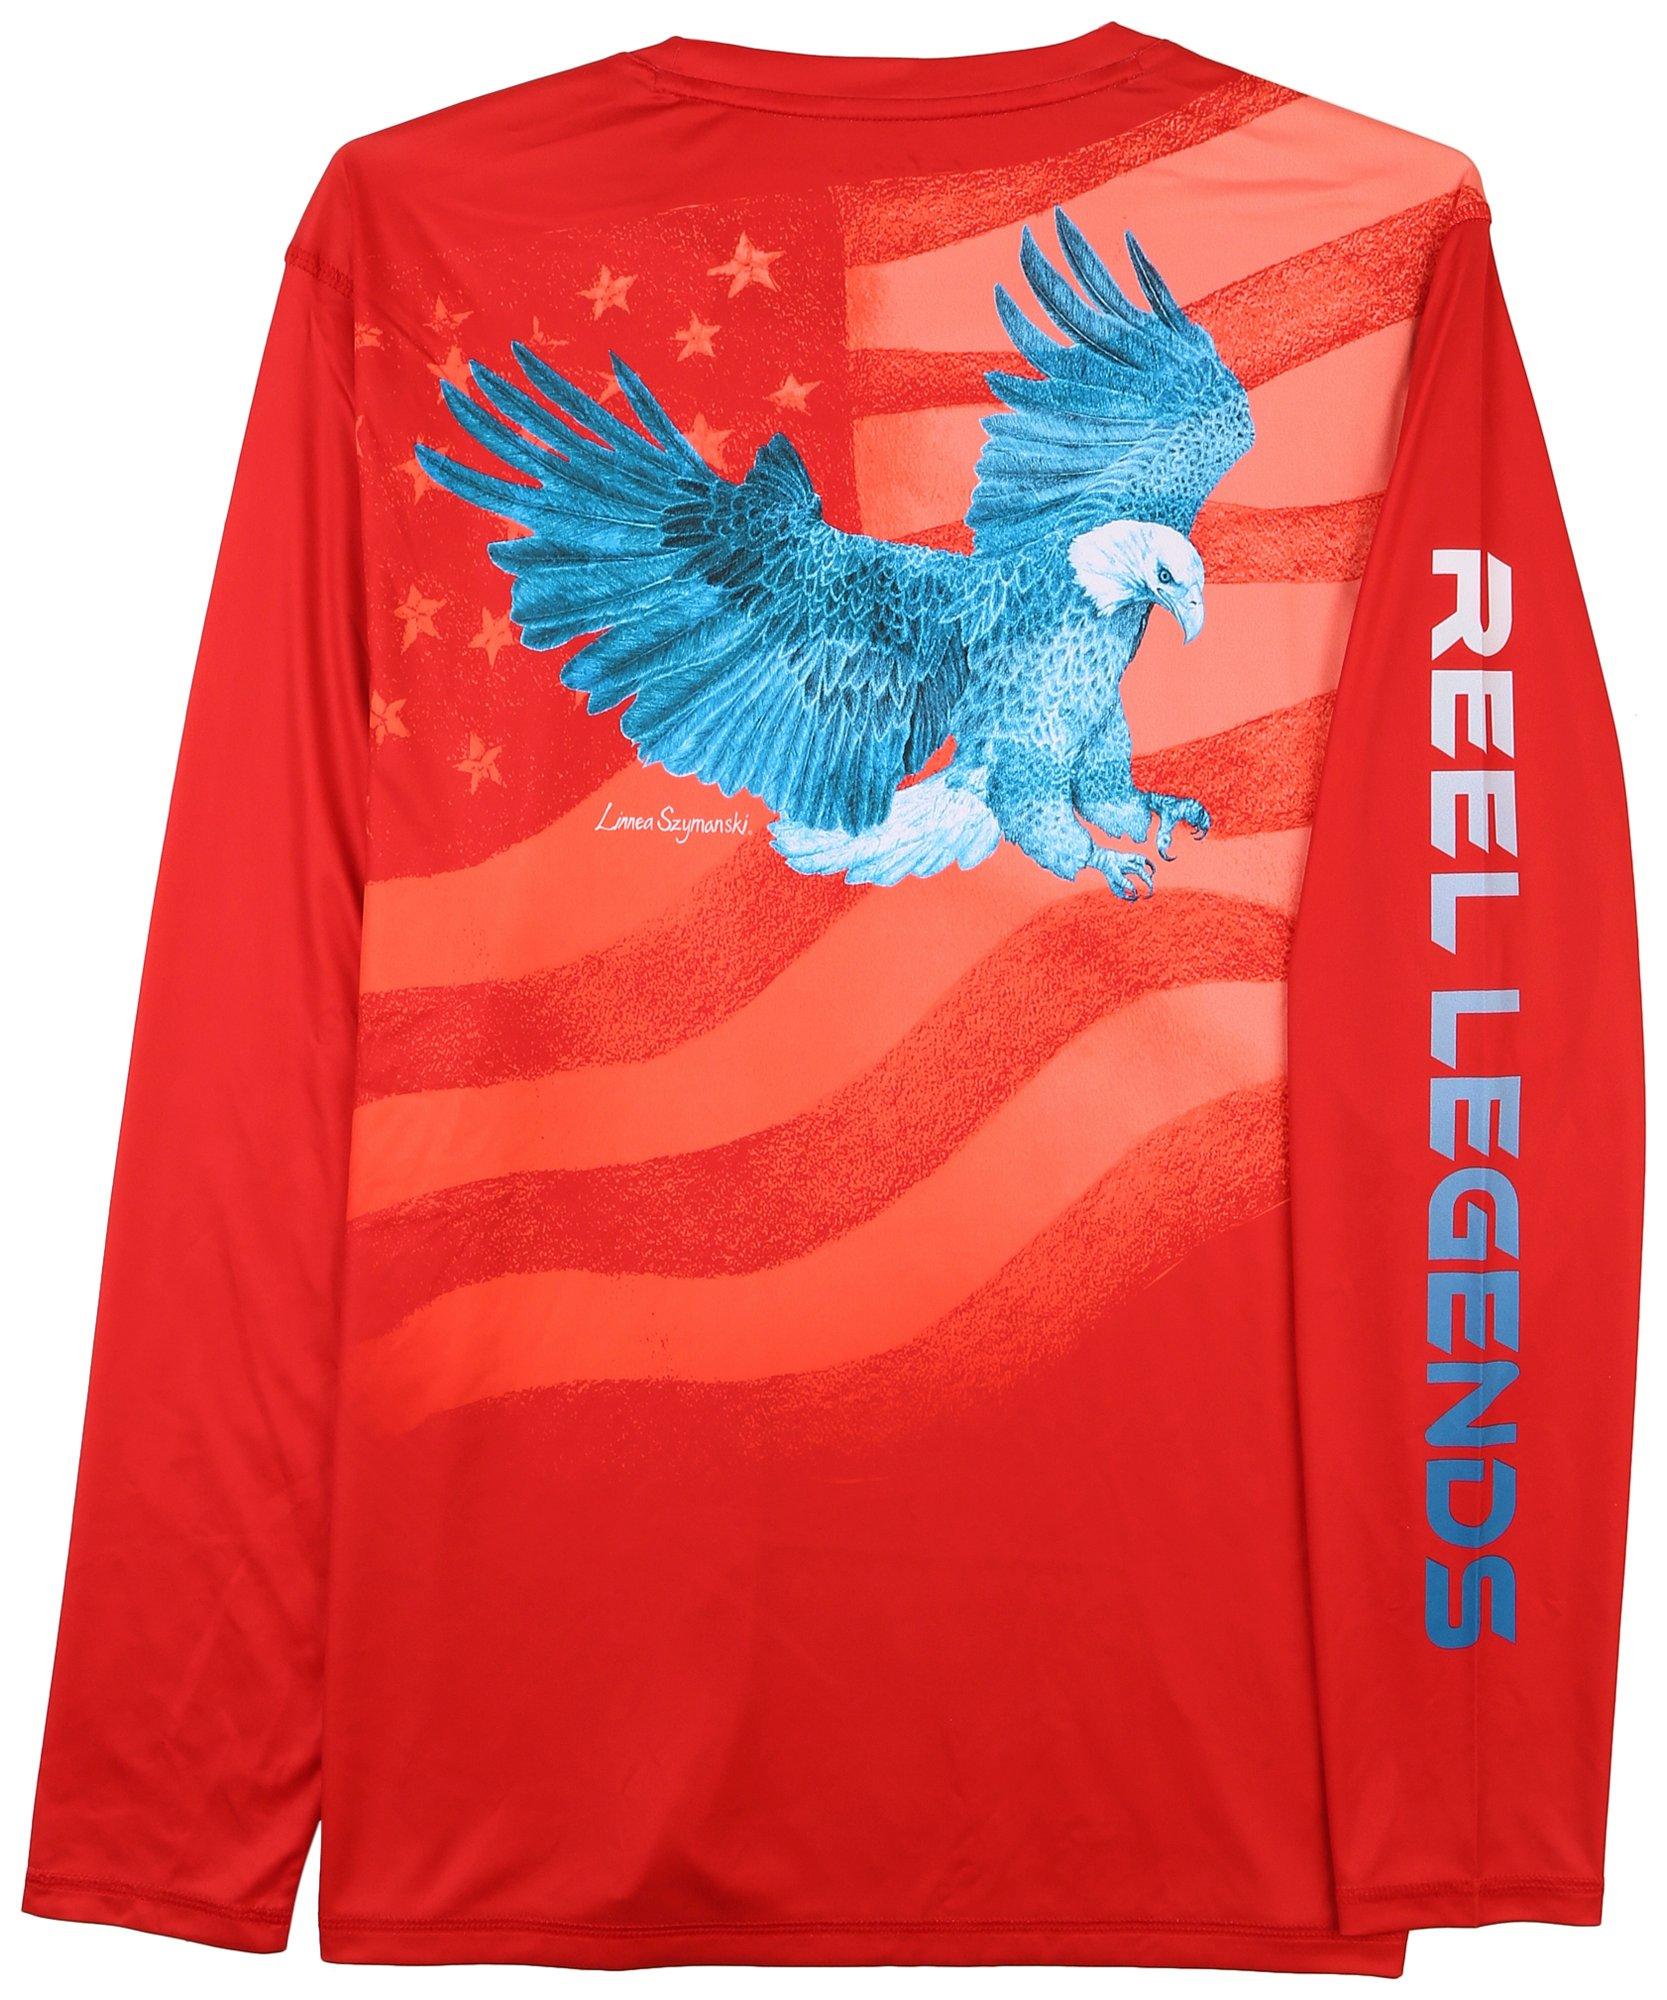 Reel Legends Mens Americana Reel-Tec Long Sleeve Top